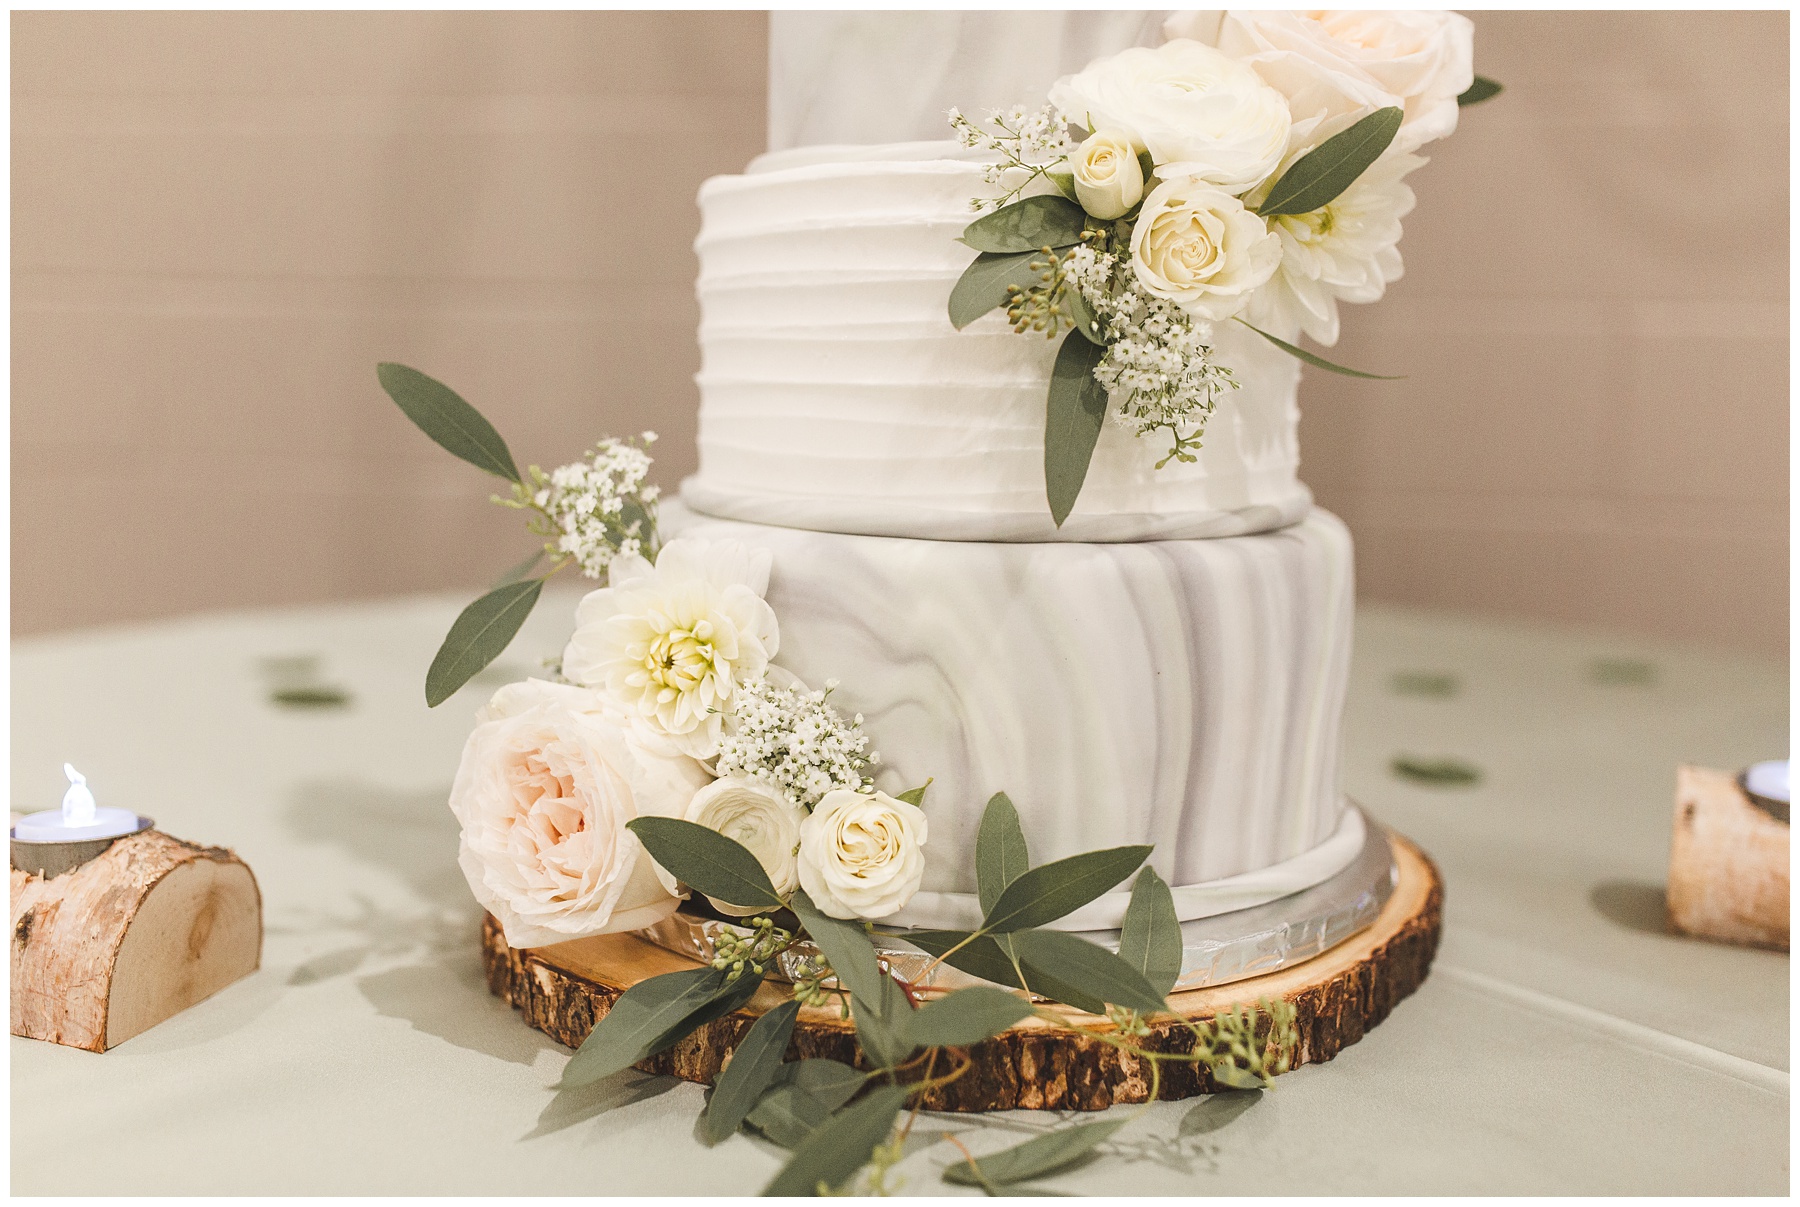 Gray marble wedding cake at reception in Boise Idaho